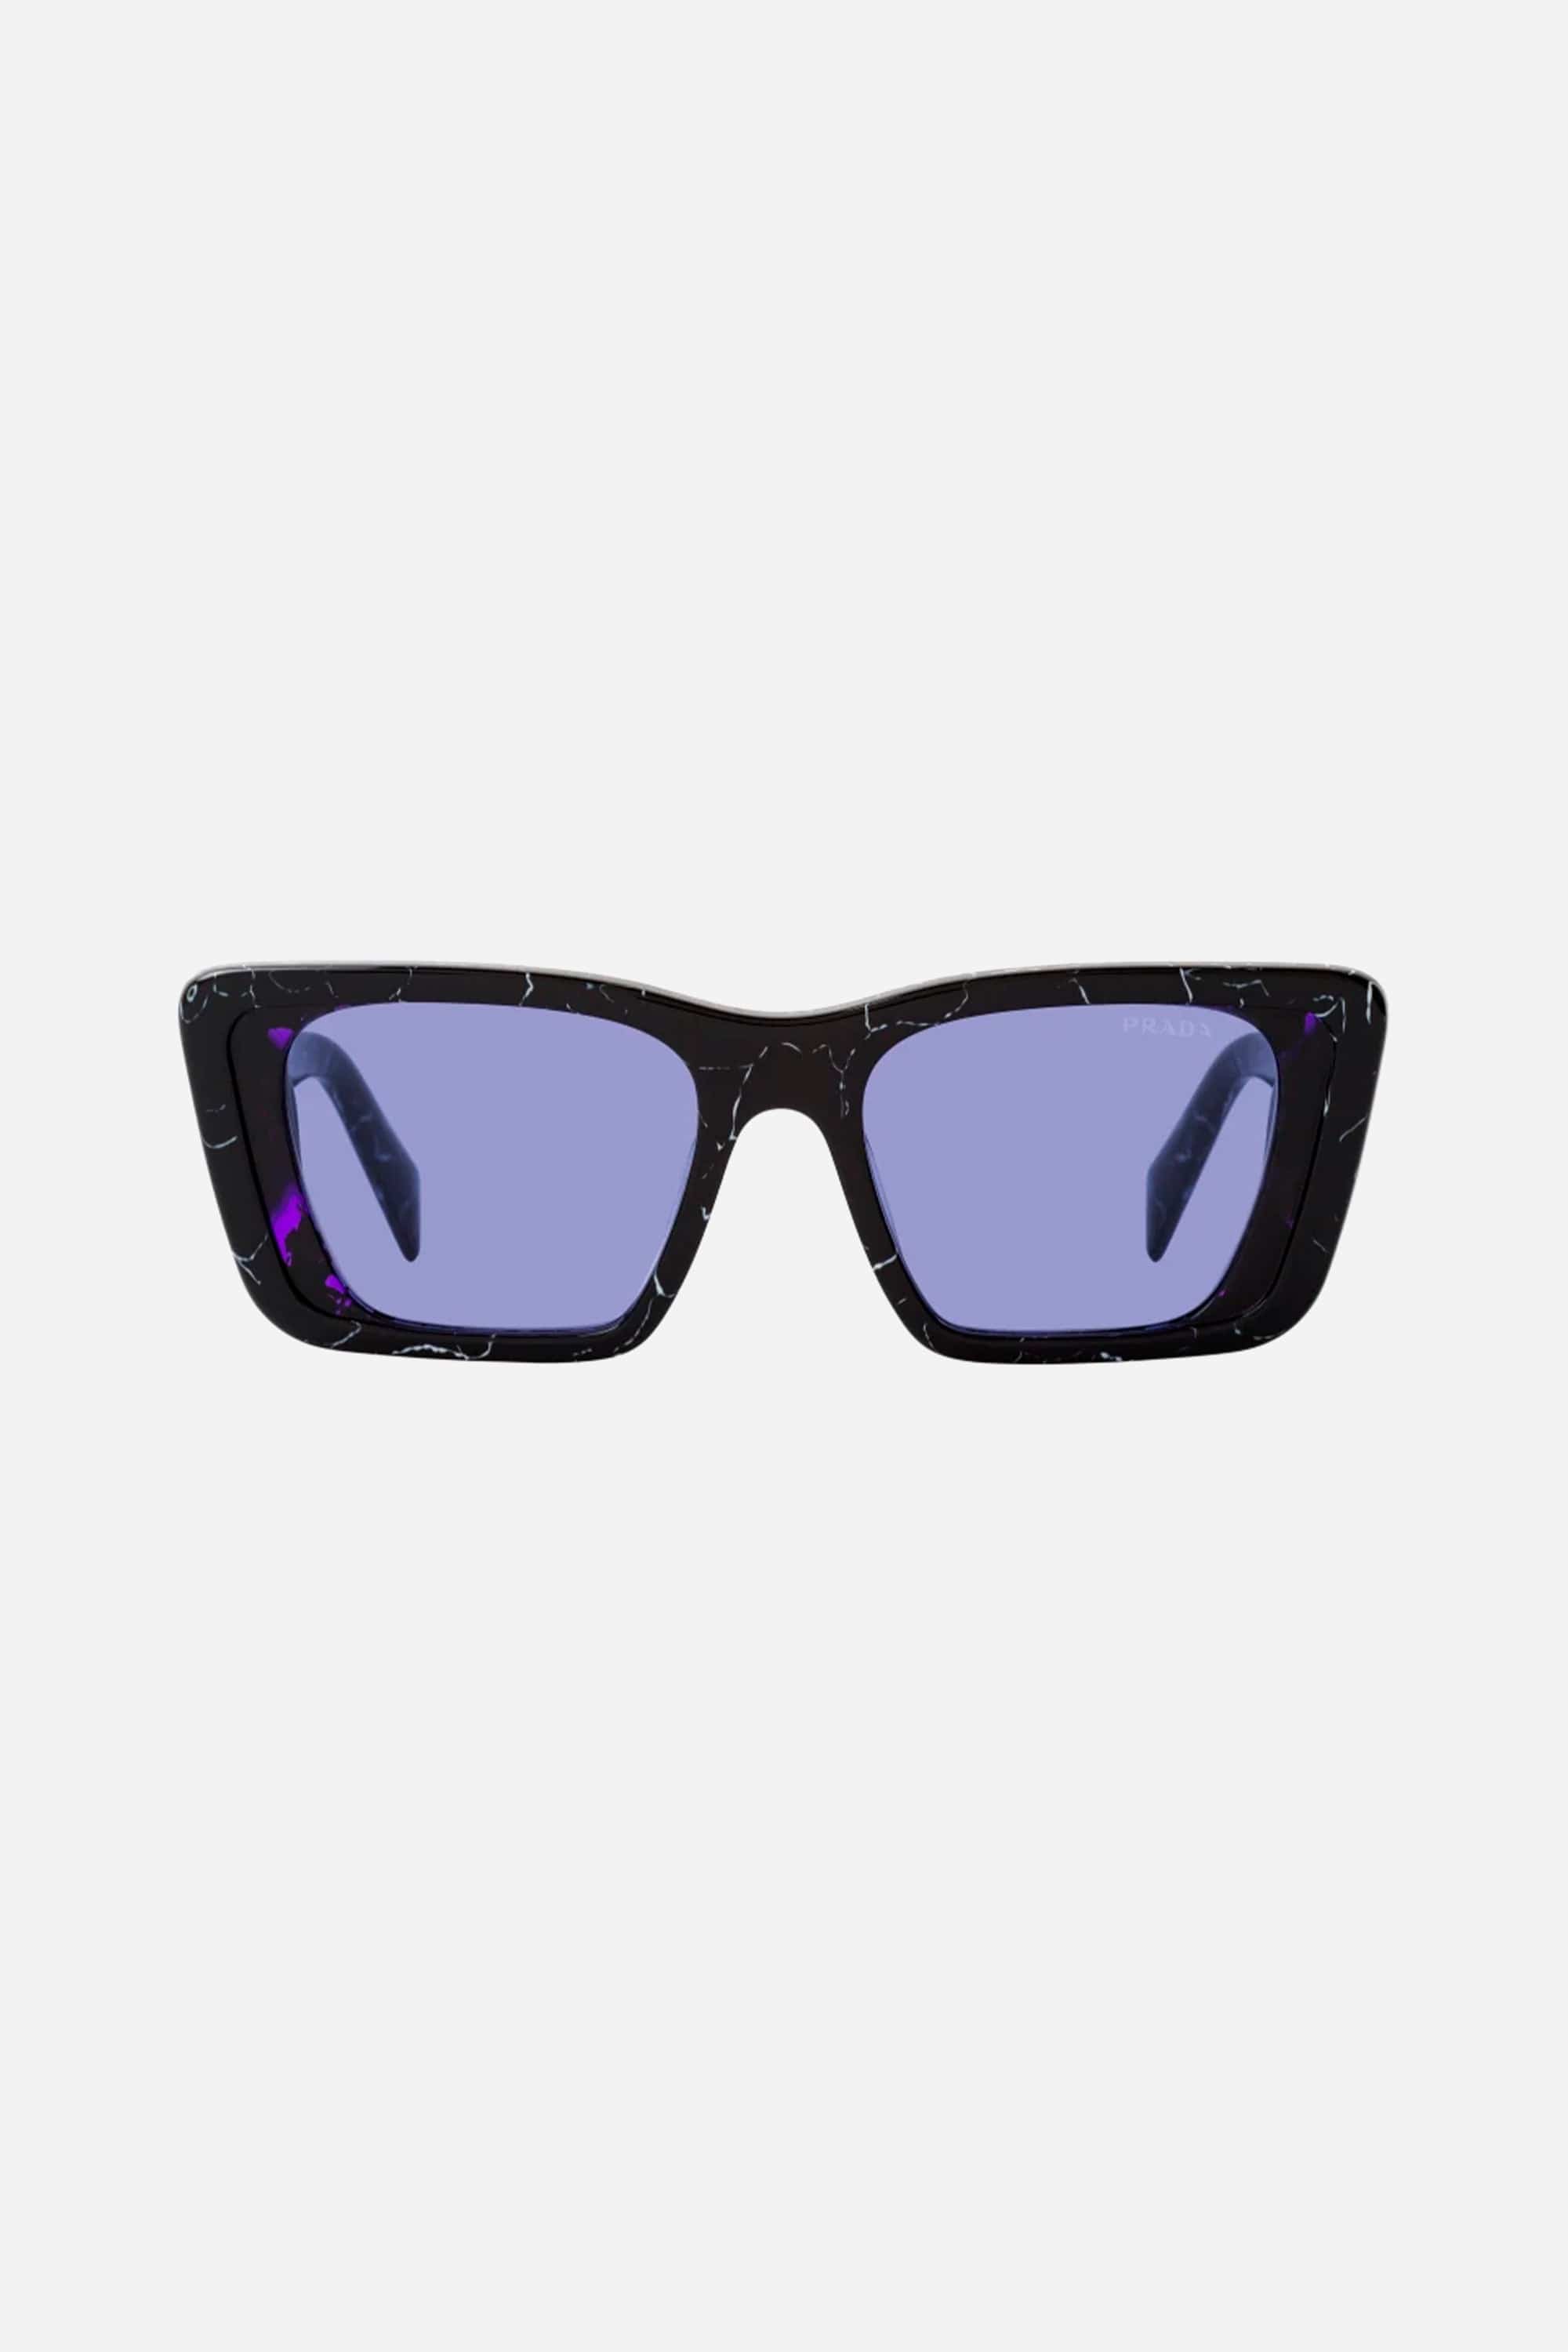 Prada PR 08YS cat-eye marble black sunglasses - Eyewear Club